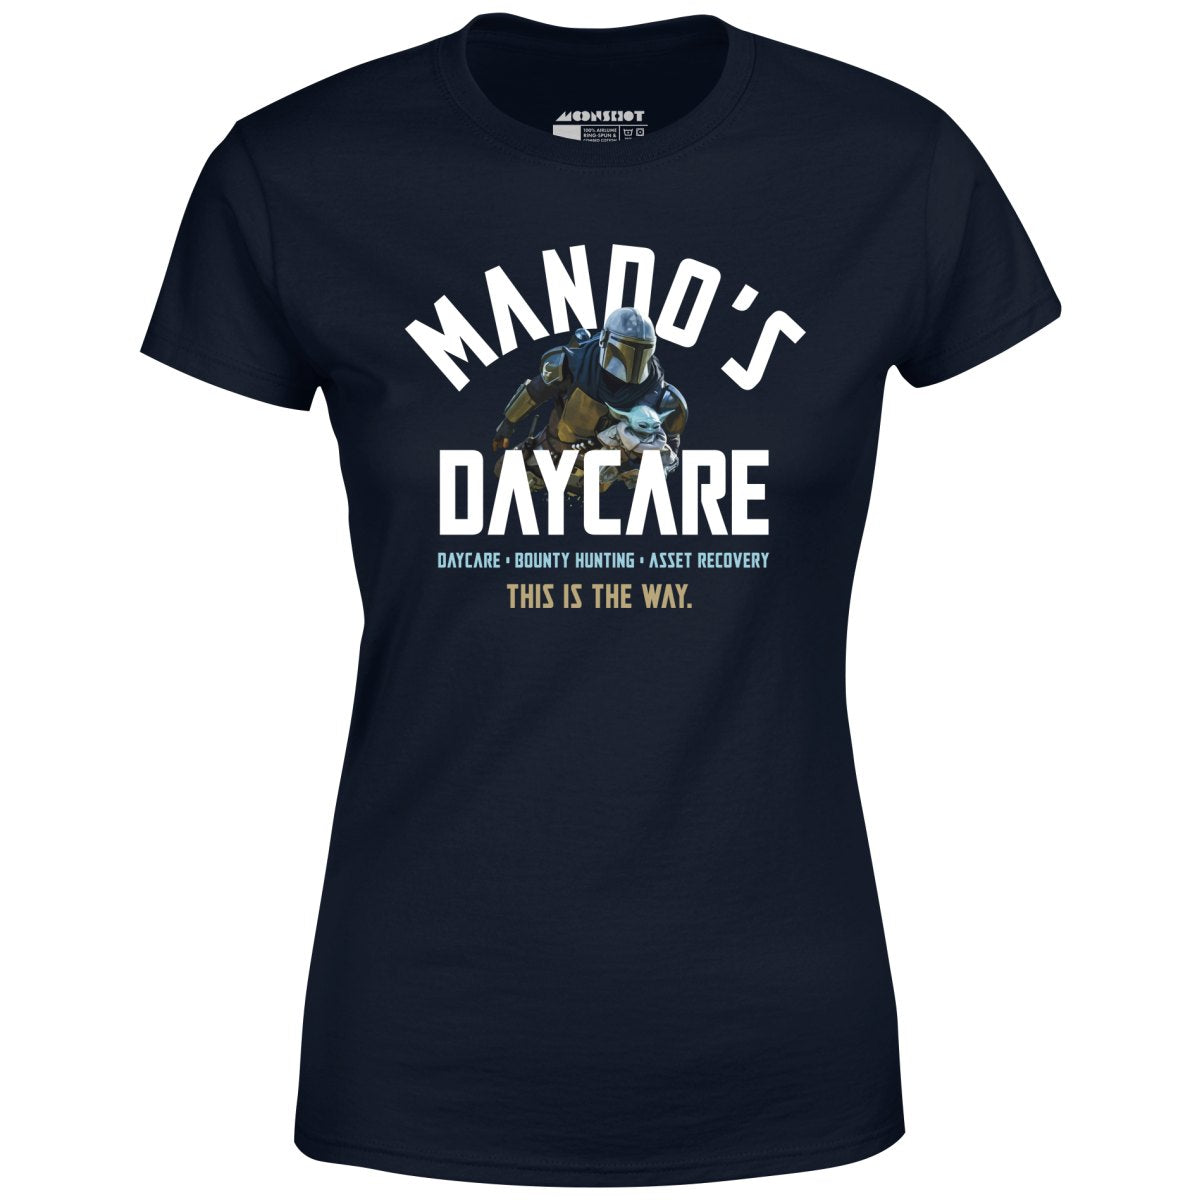 Mando's Daycare - Women's T-Shirt